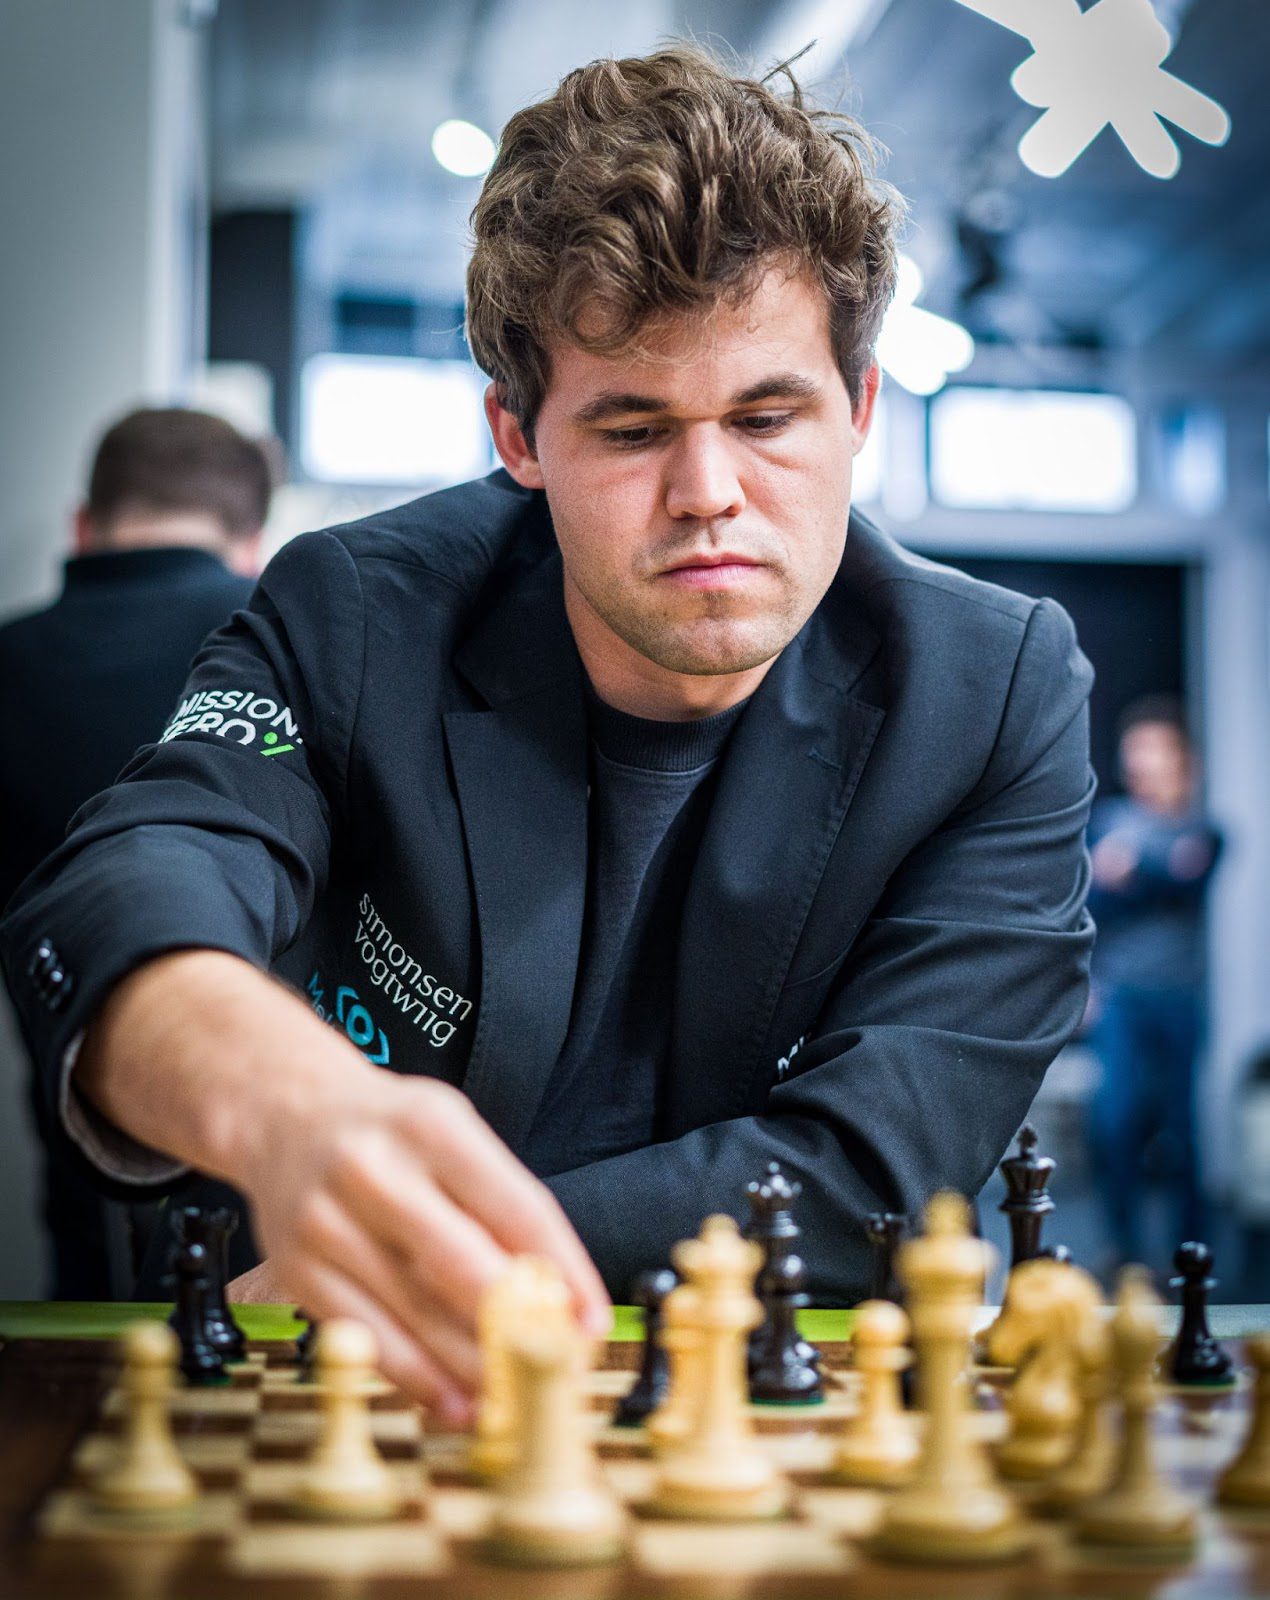 Magnus Carlsen - Magnus Carlsen added a new photo.